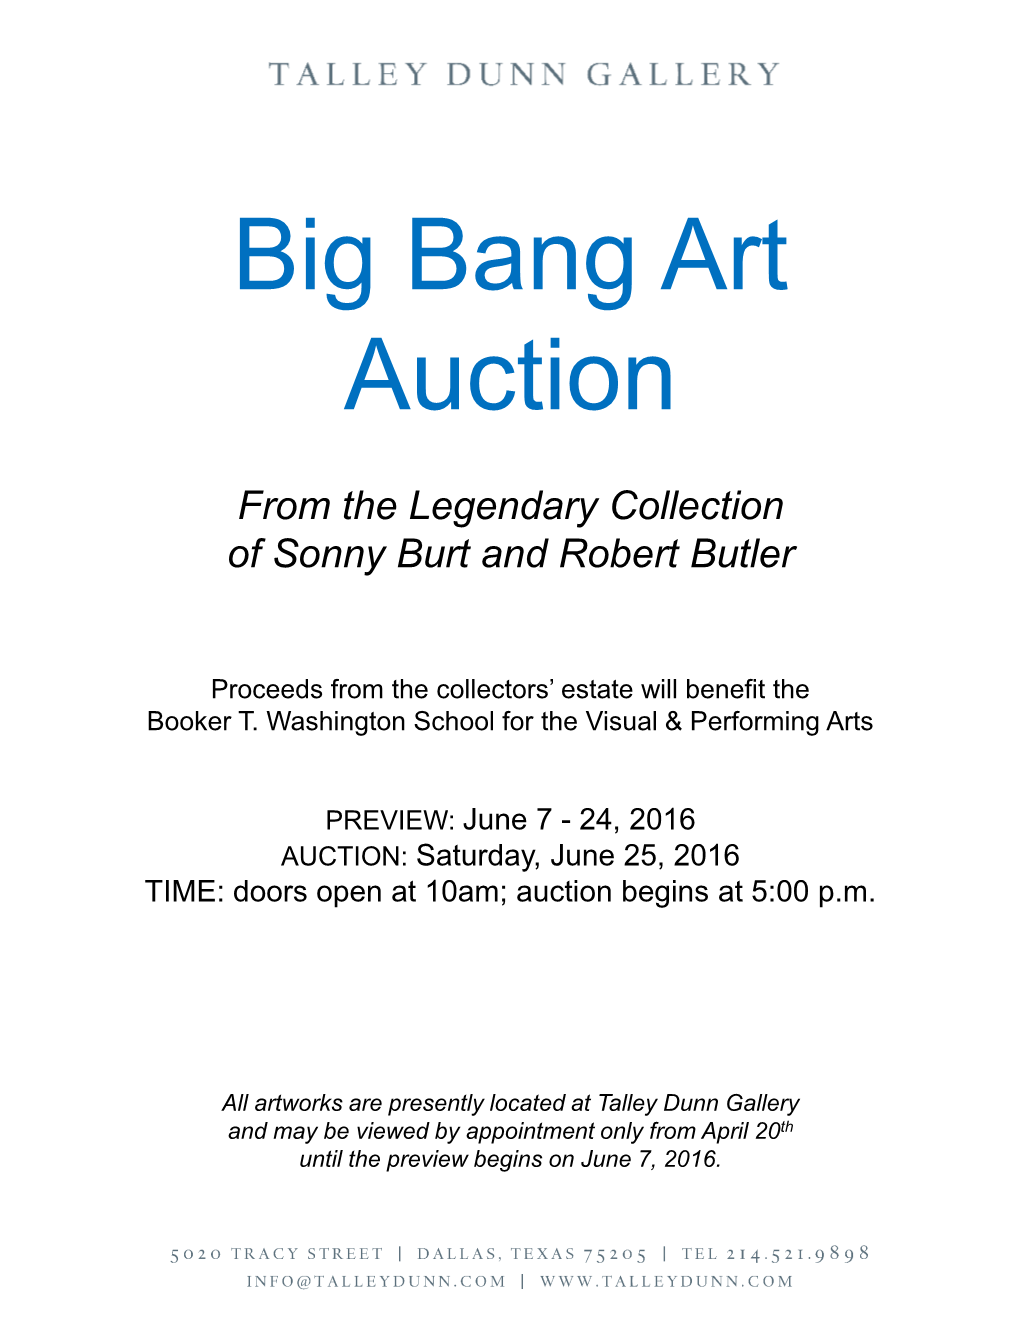 Big Bang Art Auction